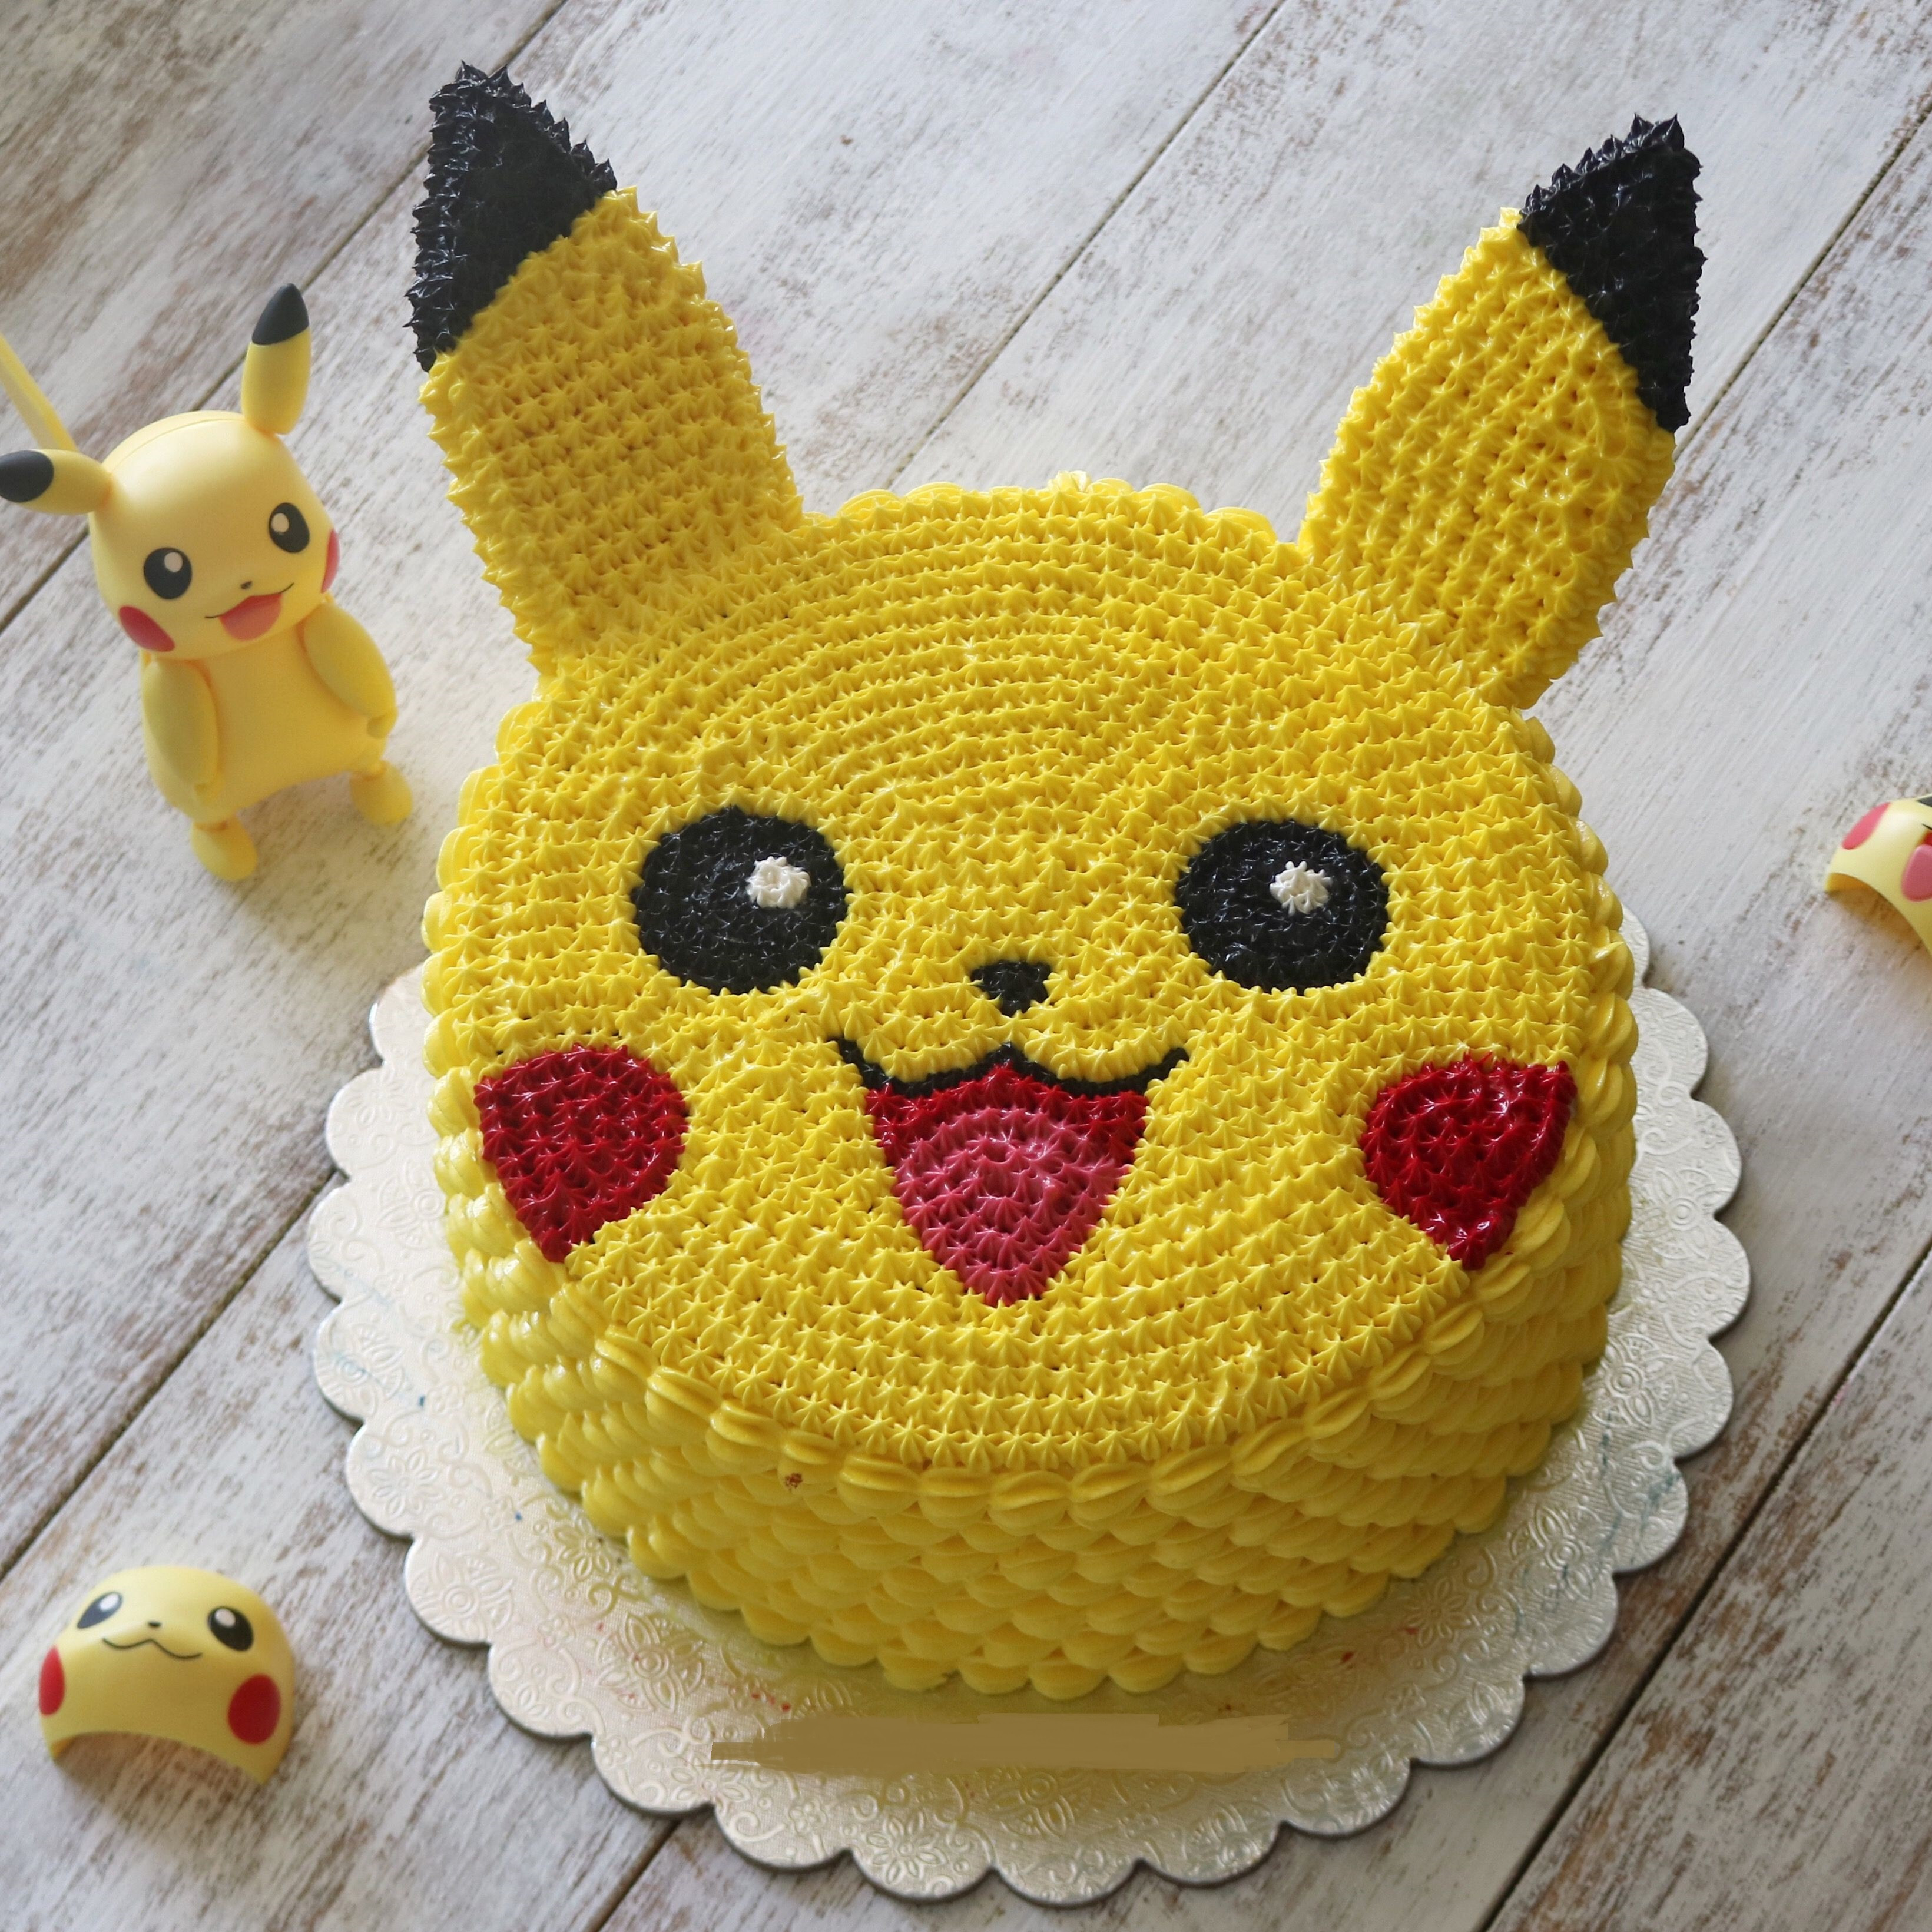 Pikachu Cake – The Cakery Hong Kong